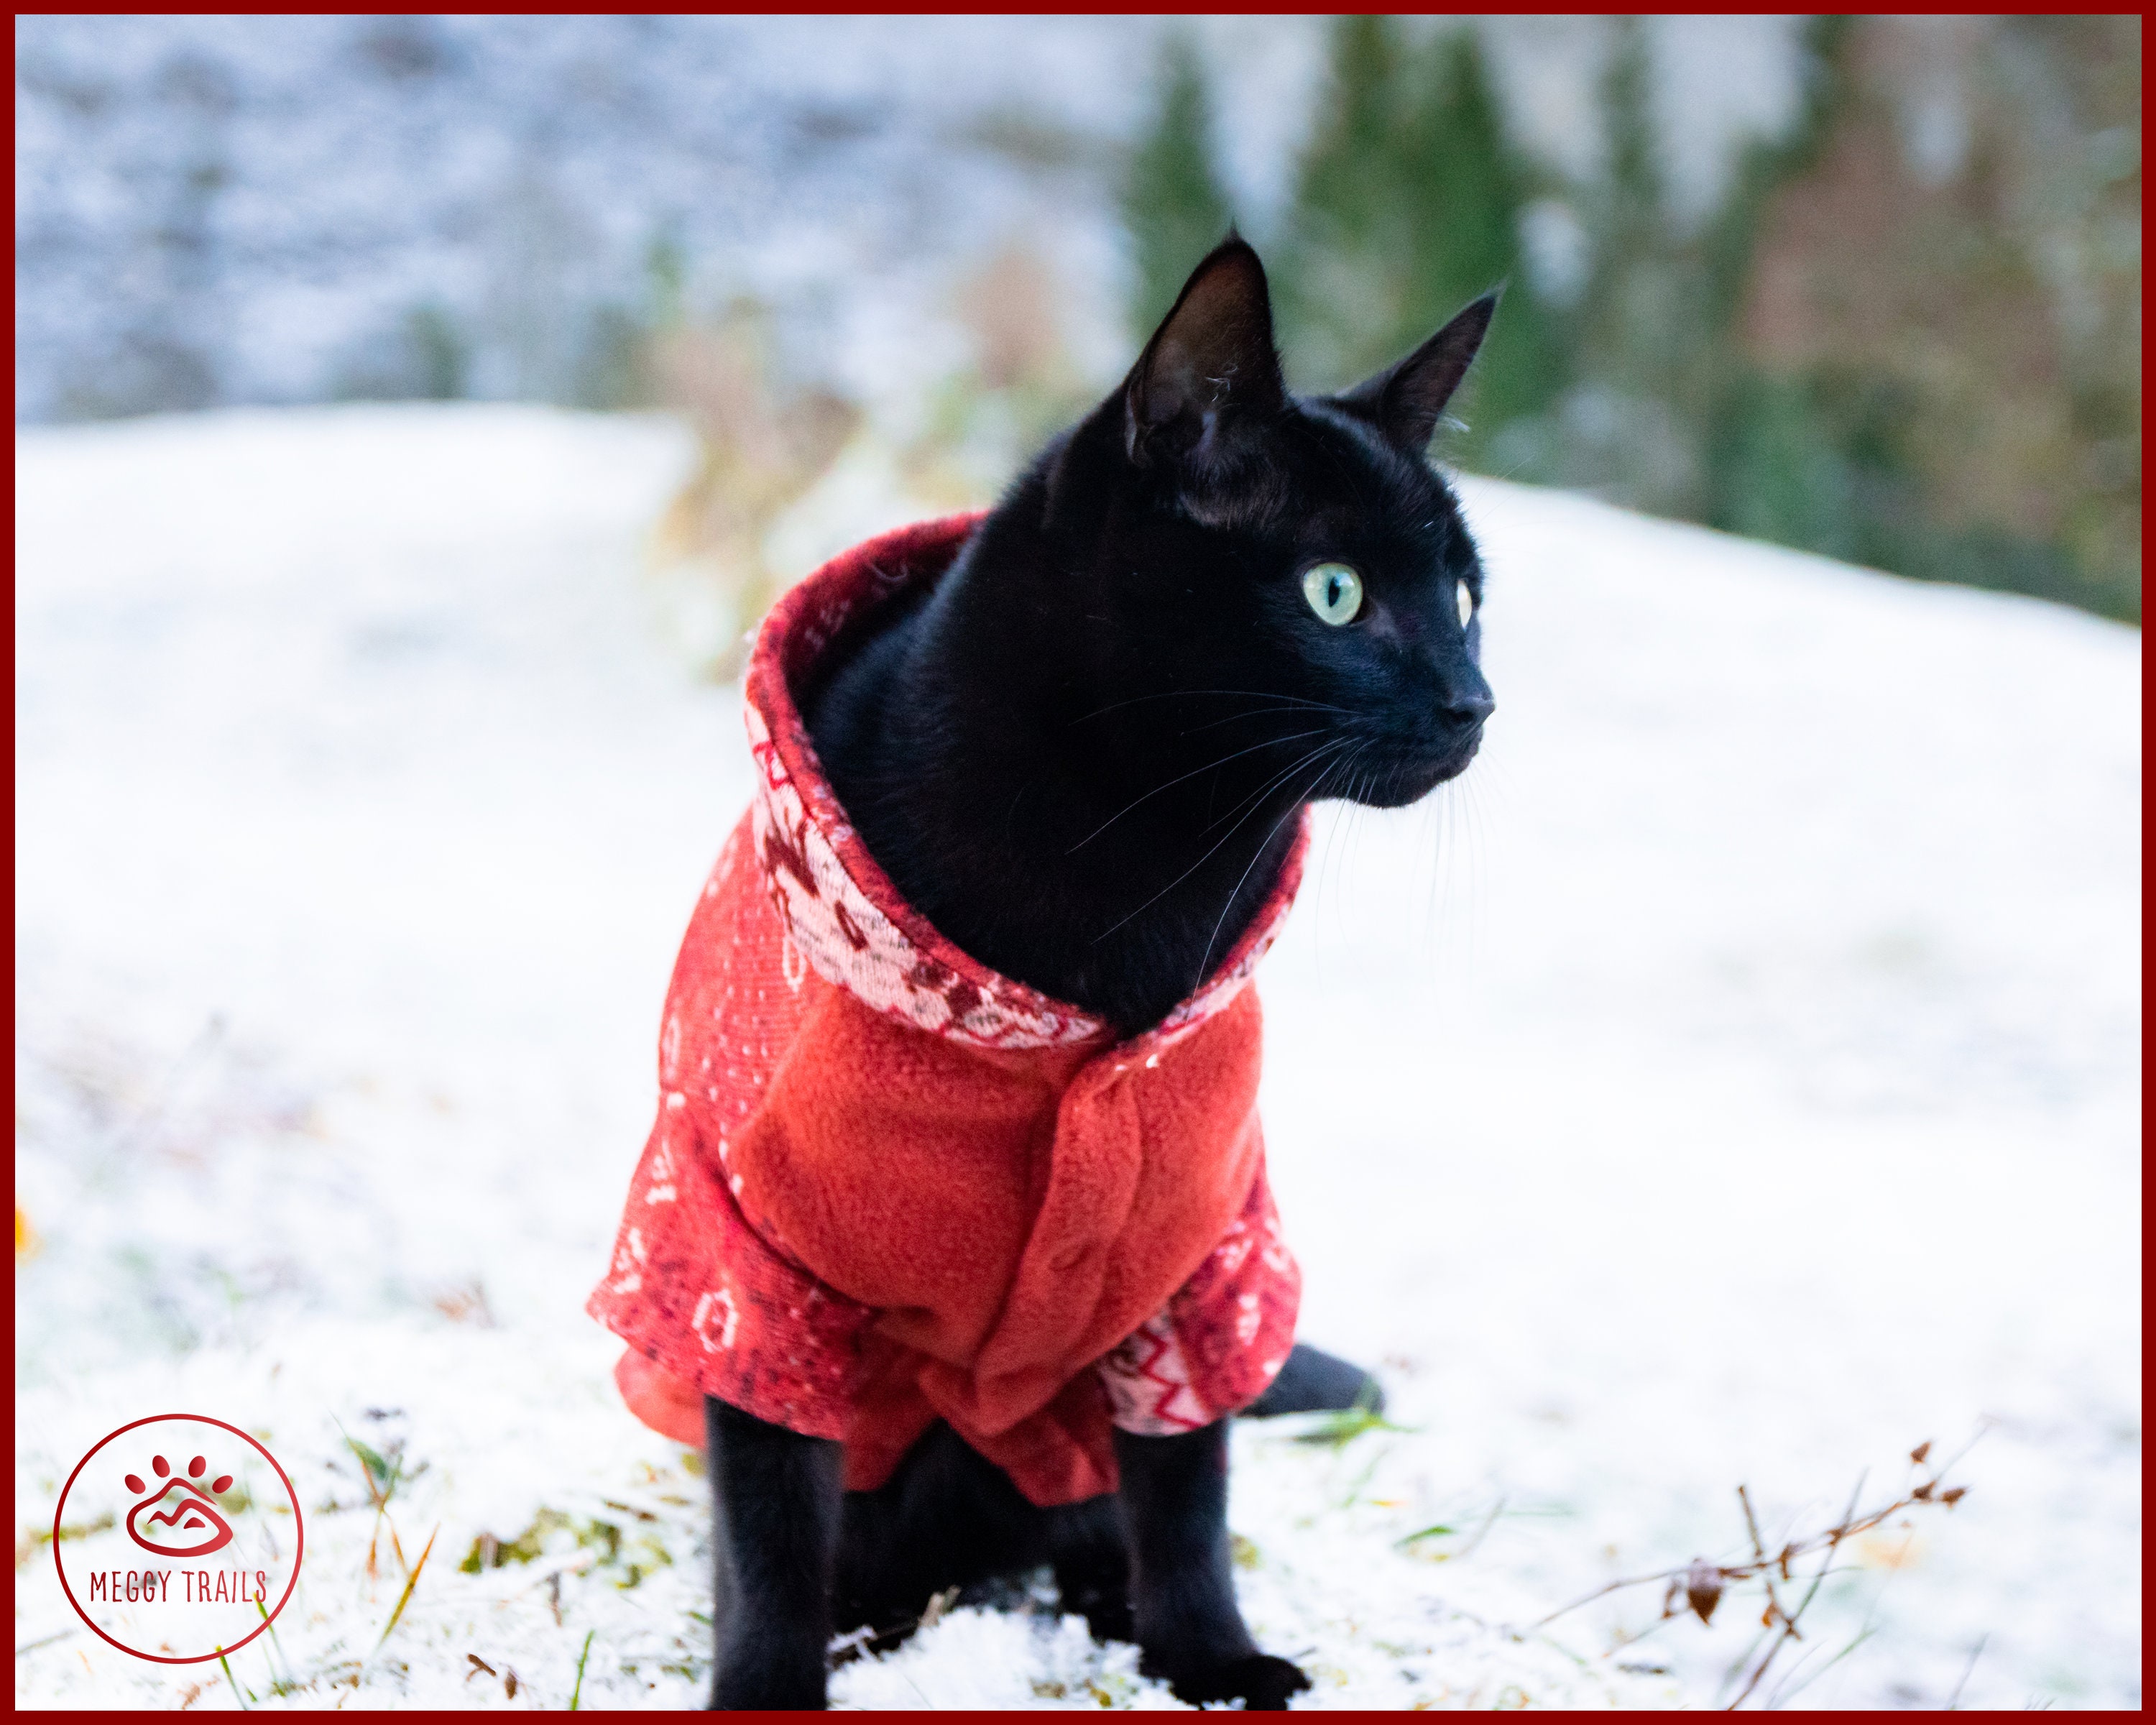 Buddy Cat Reflective Full Stretch Cat Collar, Red